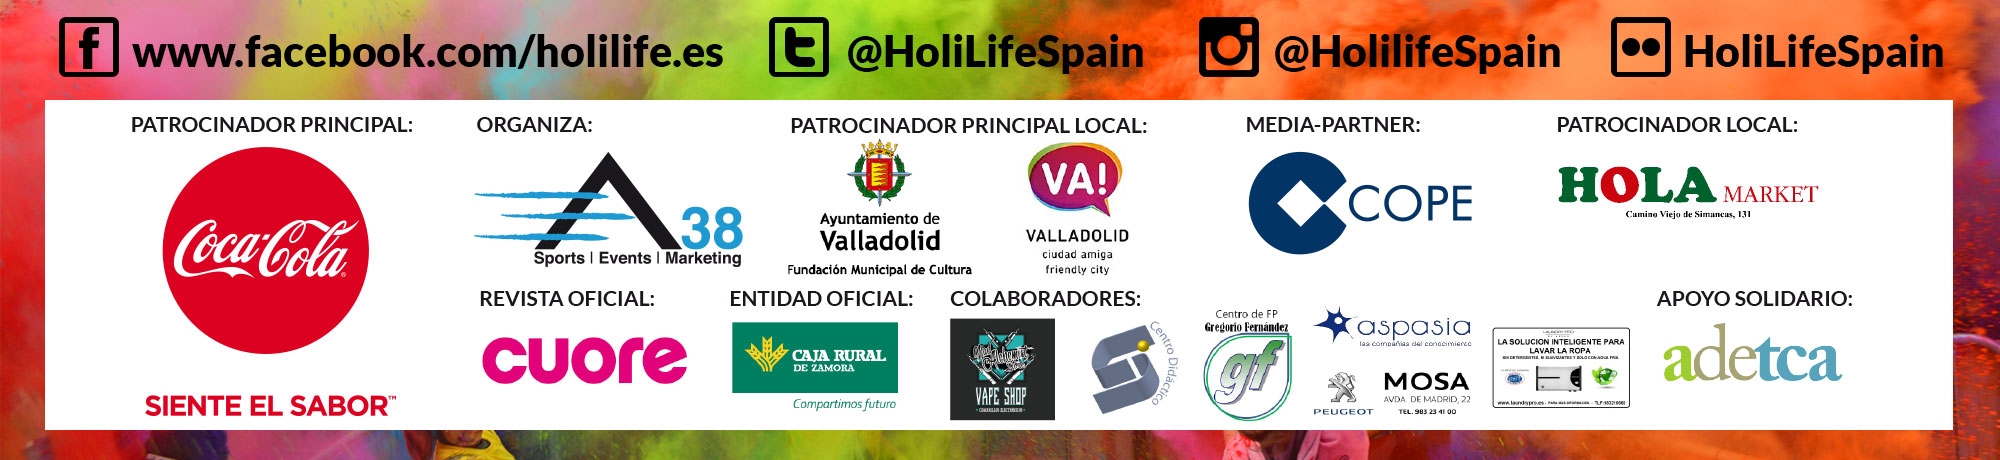 Holi Life Valladolid 4th Edition 20-05-18